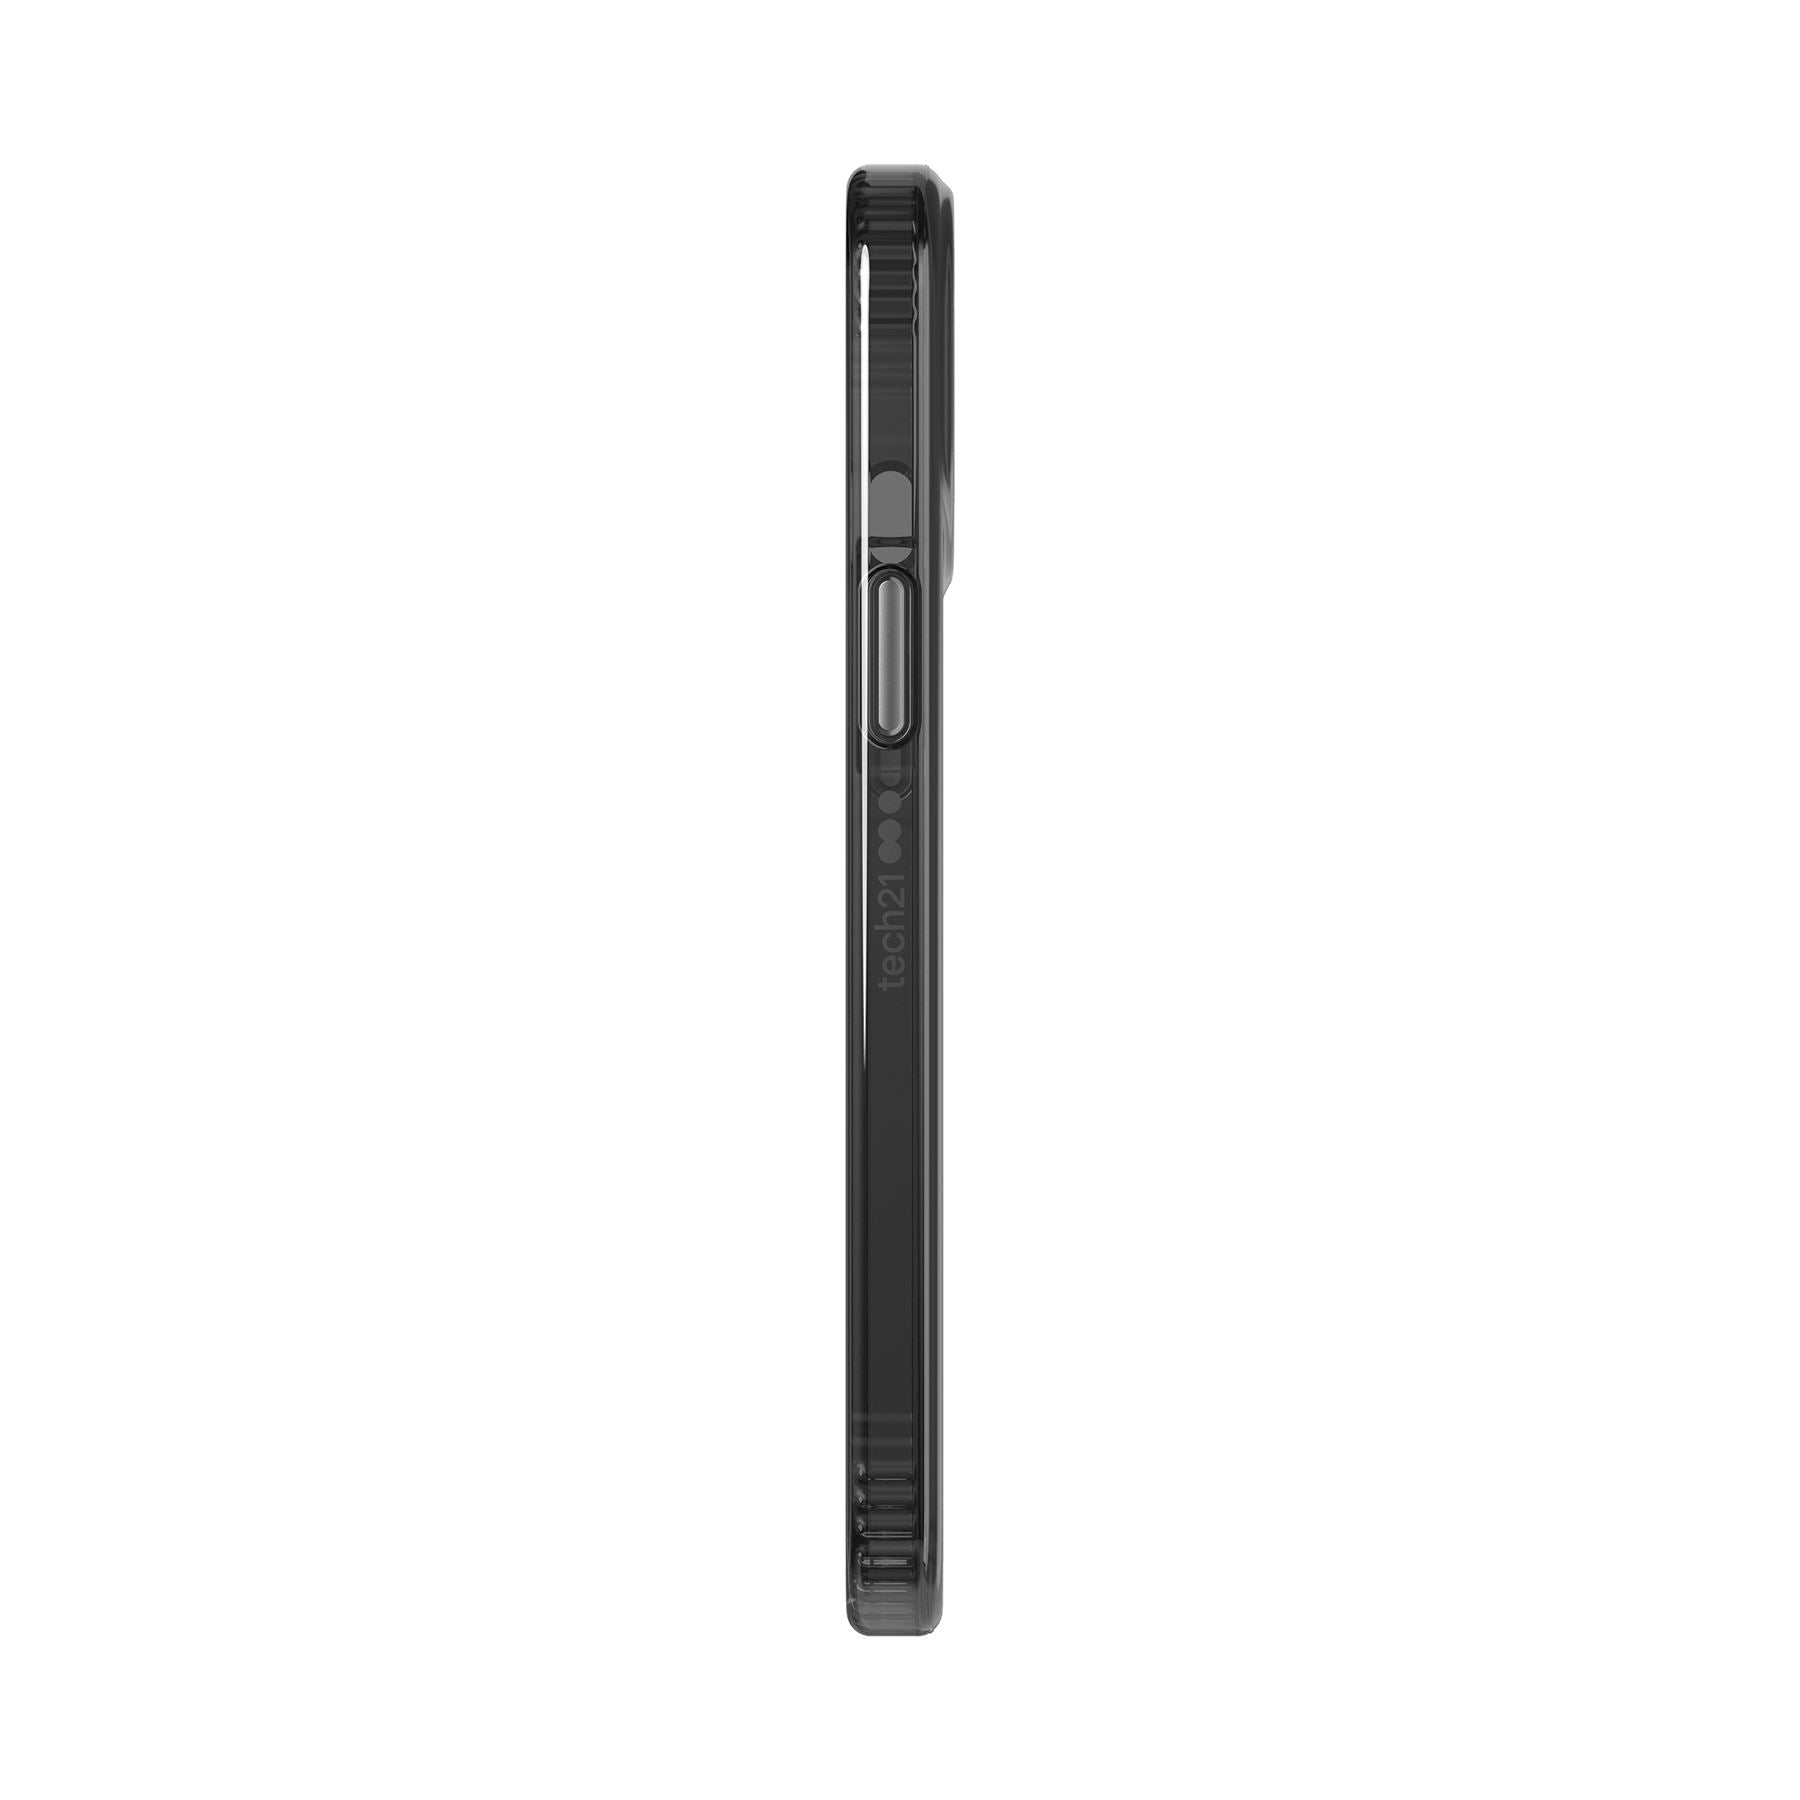 Evo Tint - Apple iPhone 12 Pro Max Case - Carbon